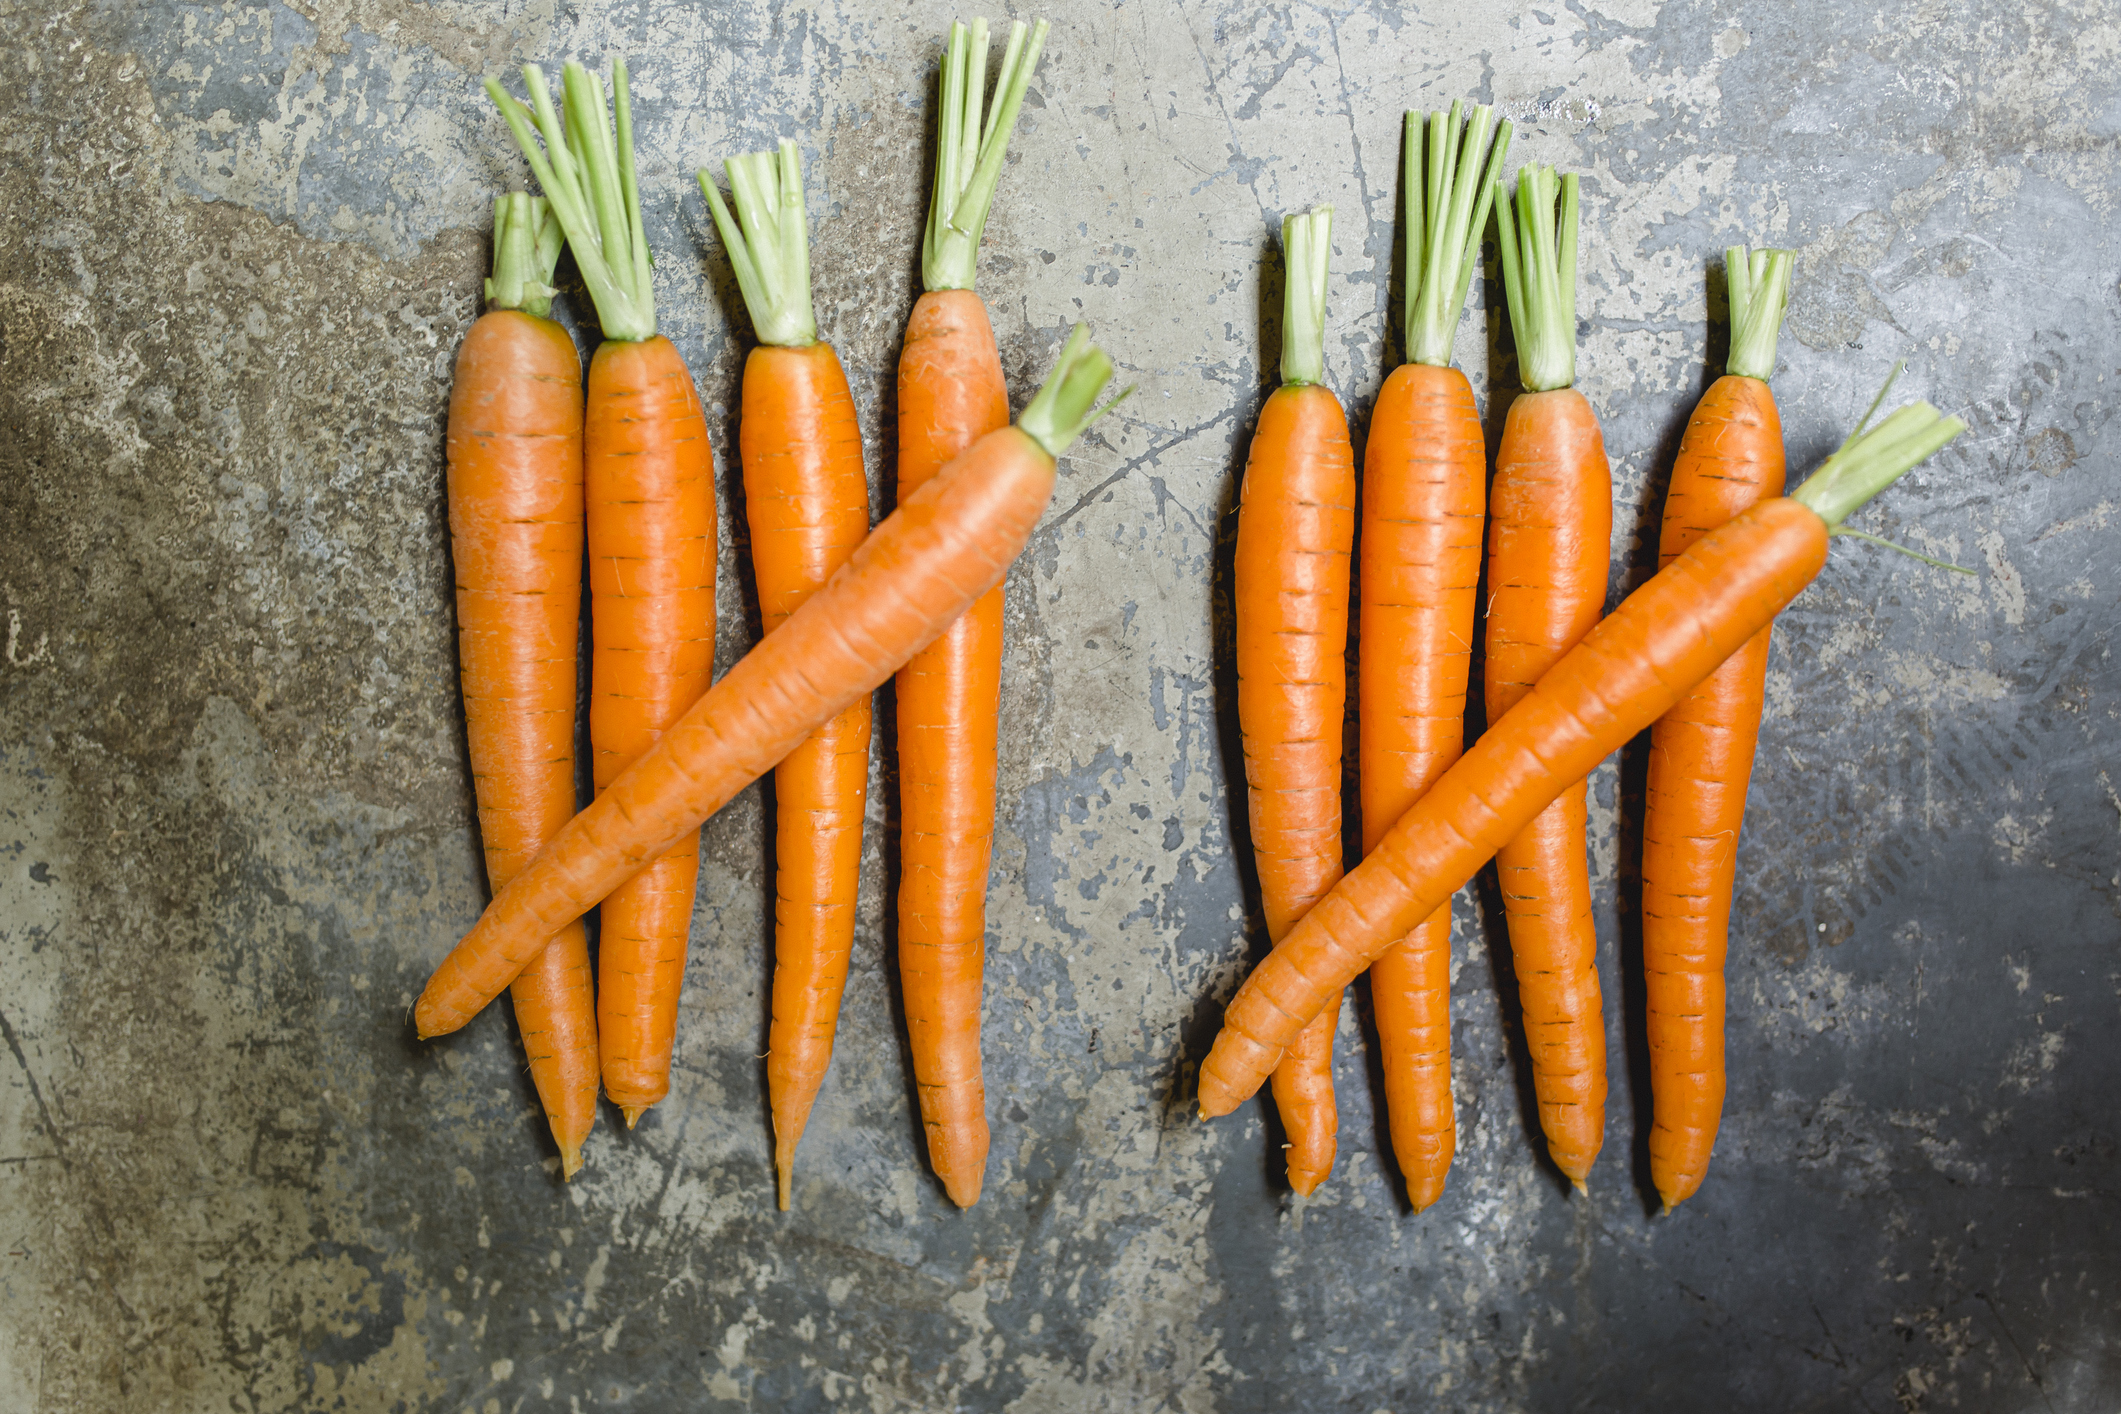 ten carrots arranged in tally mark-style